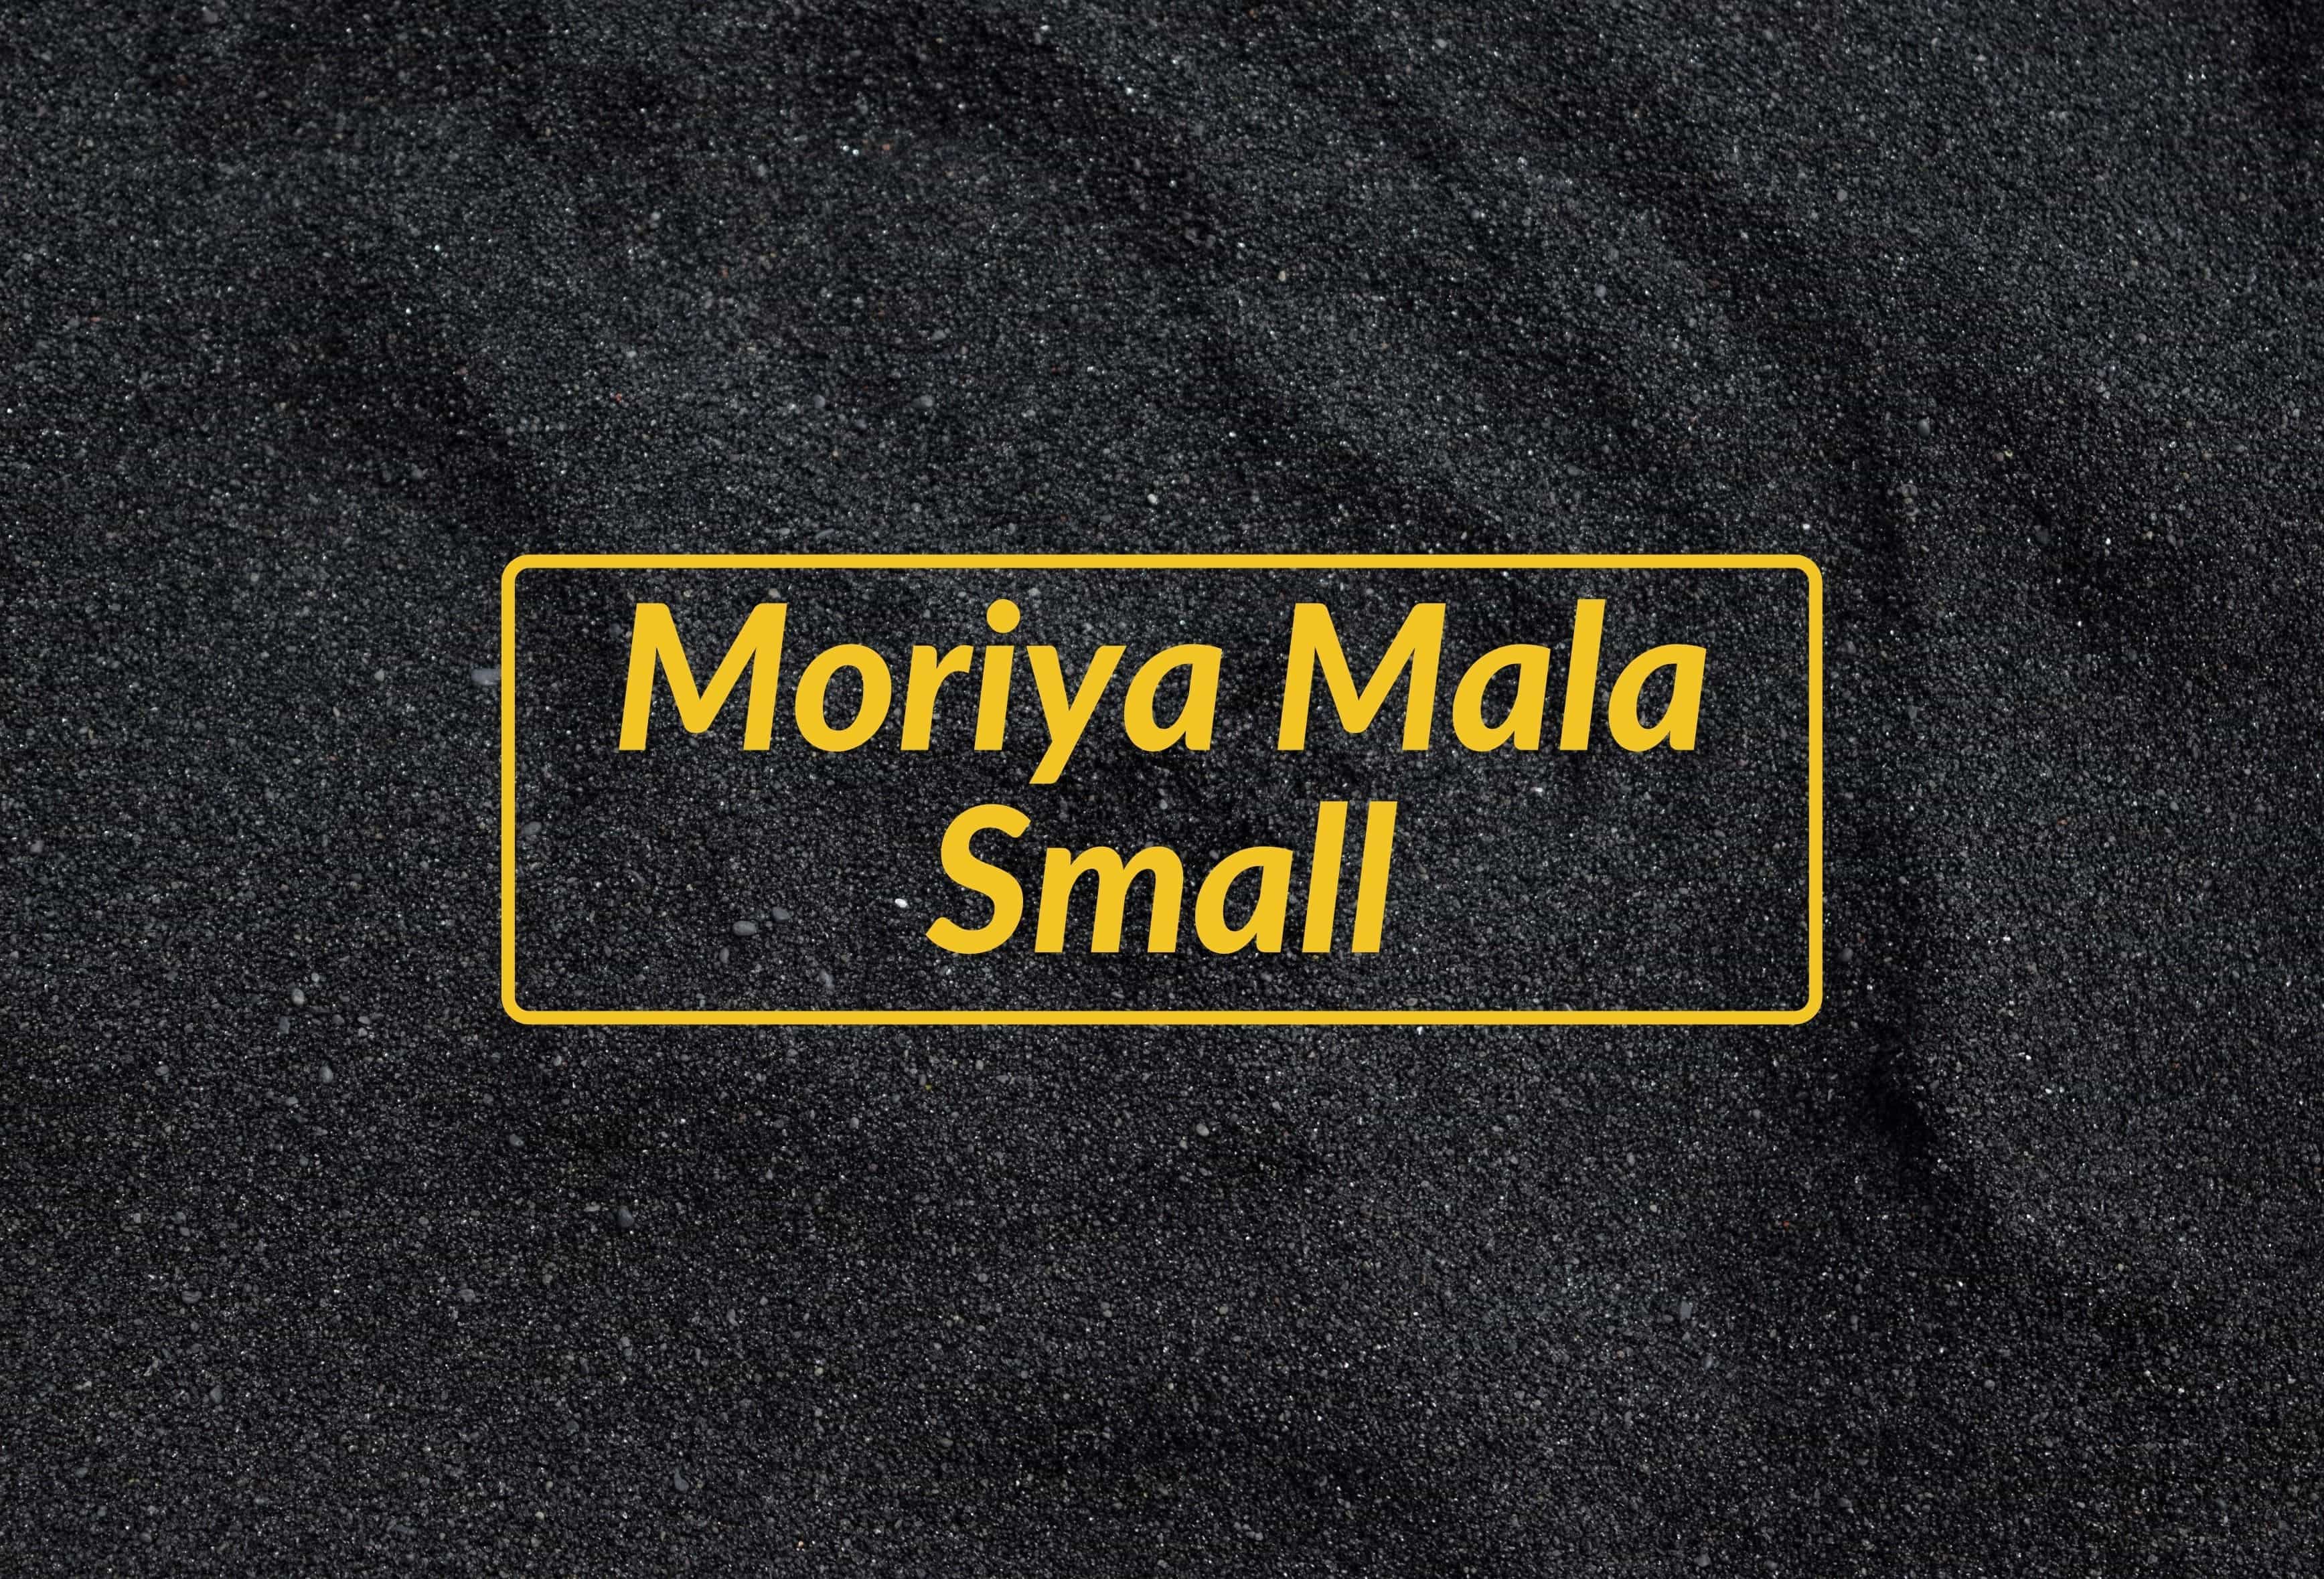 Moriya Mala Small